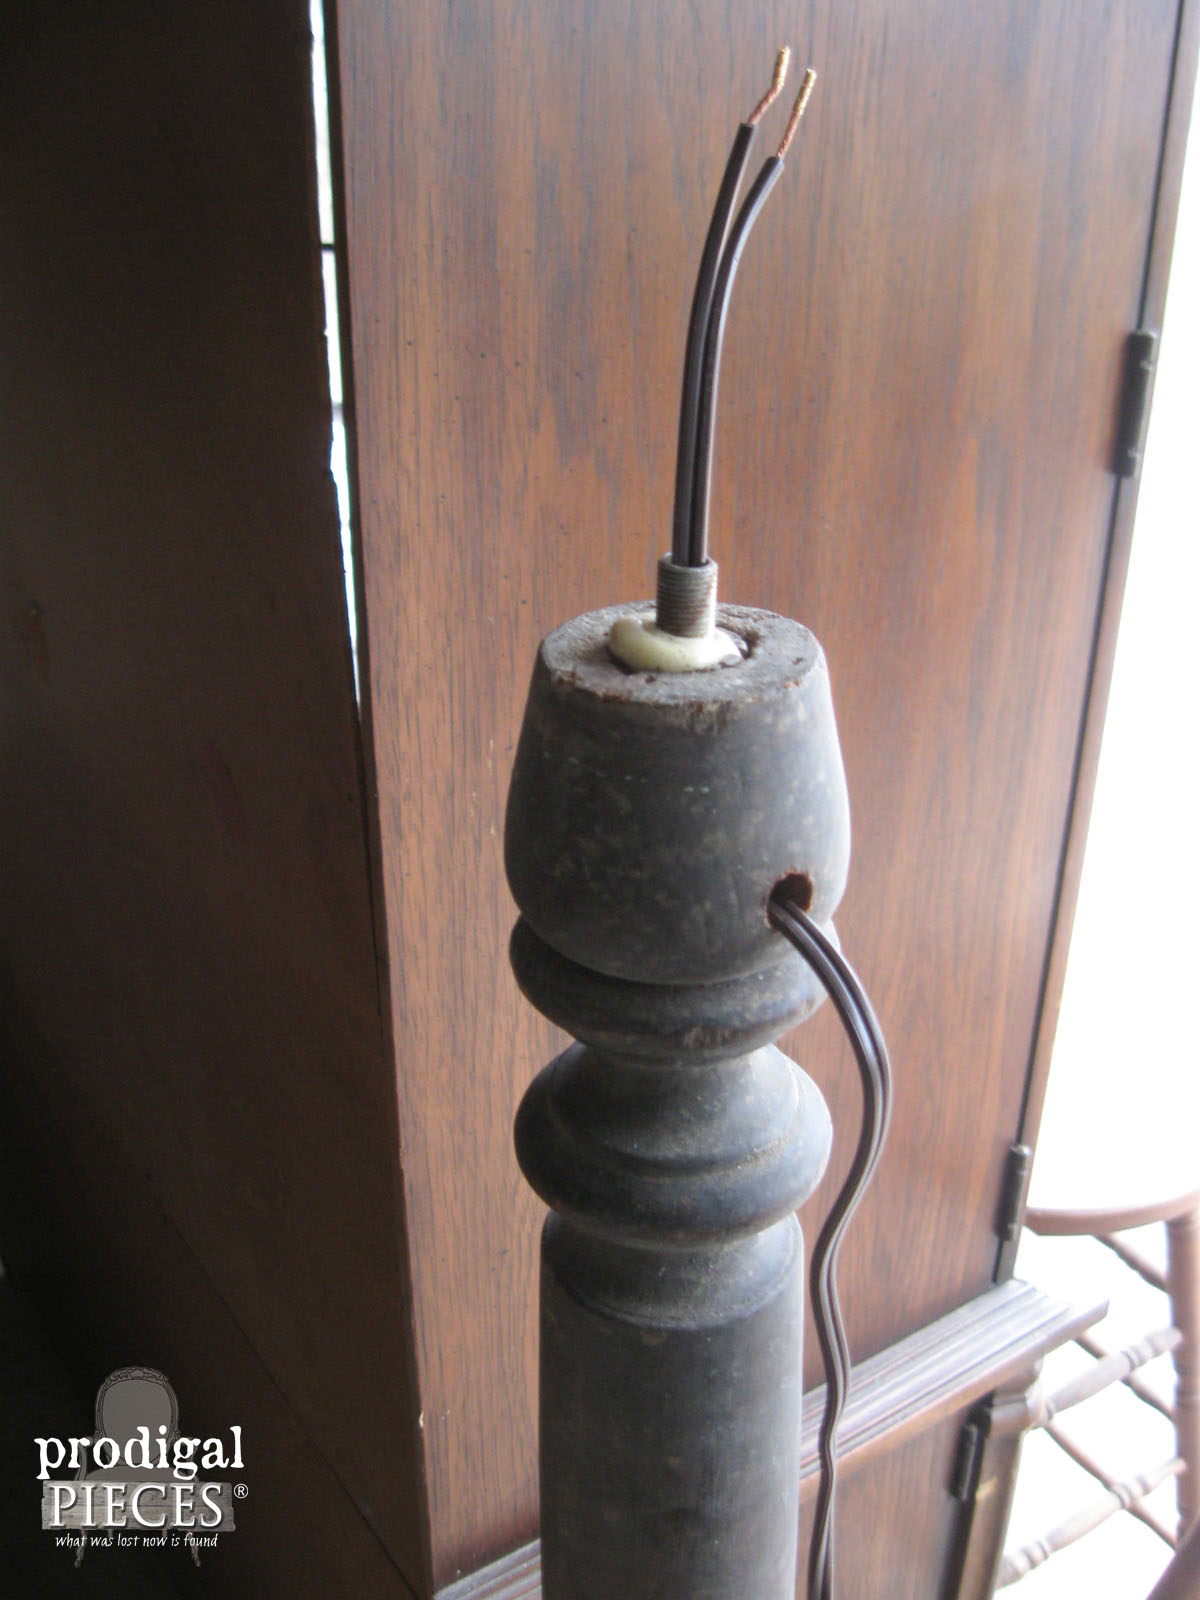 Adding Wiring to Repurposed Antique Rocker Leg Lamp | Prodigal Pieces | www.prodigalpieces.com